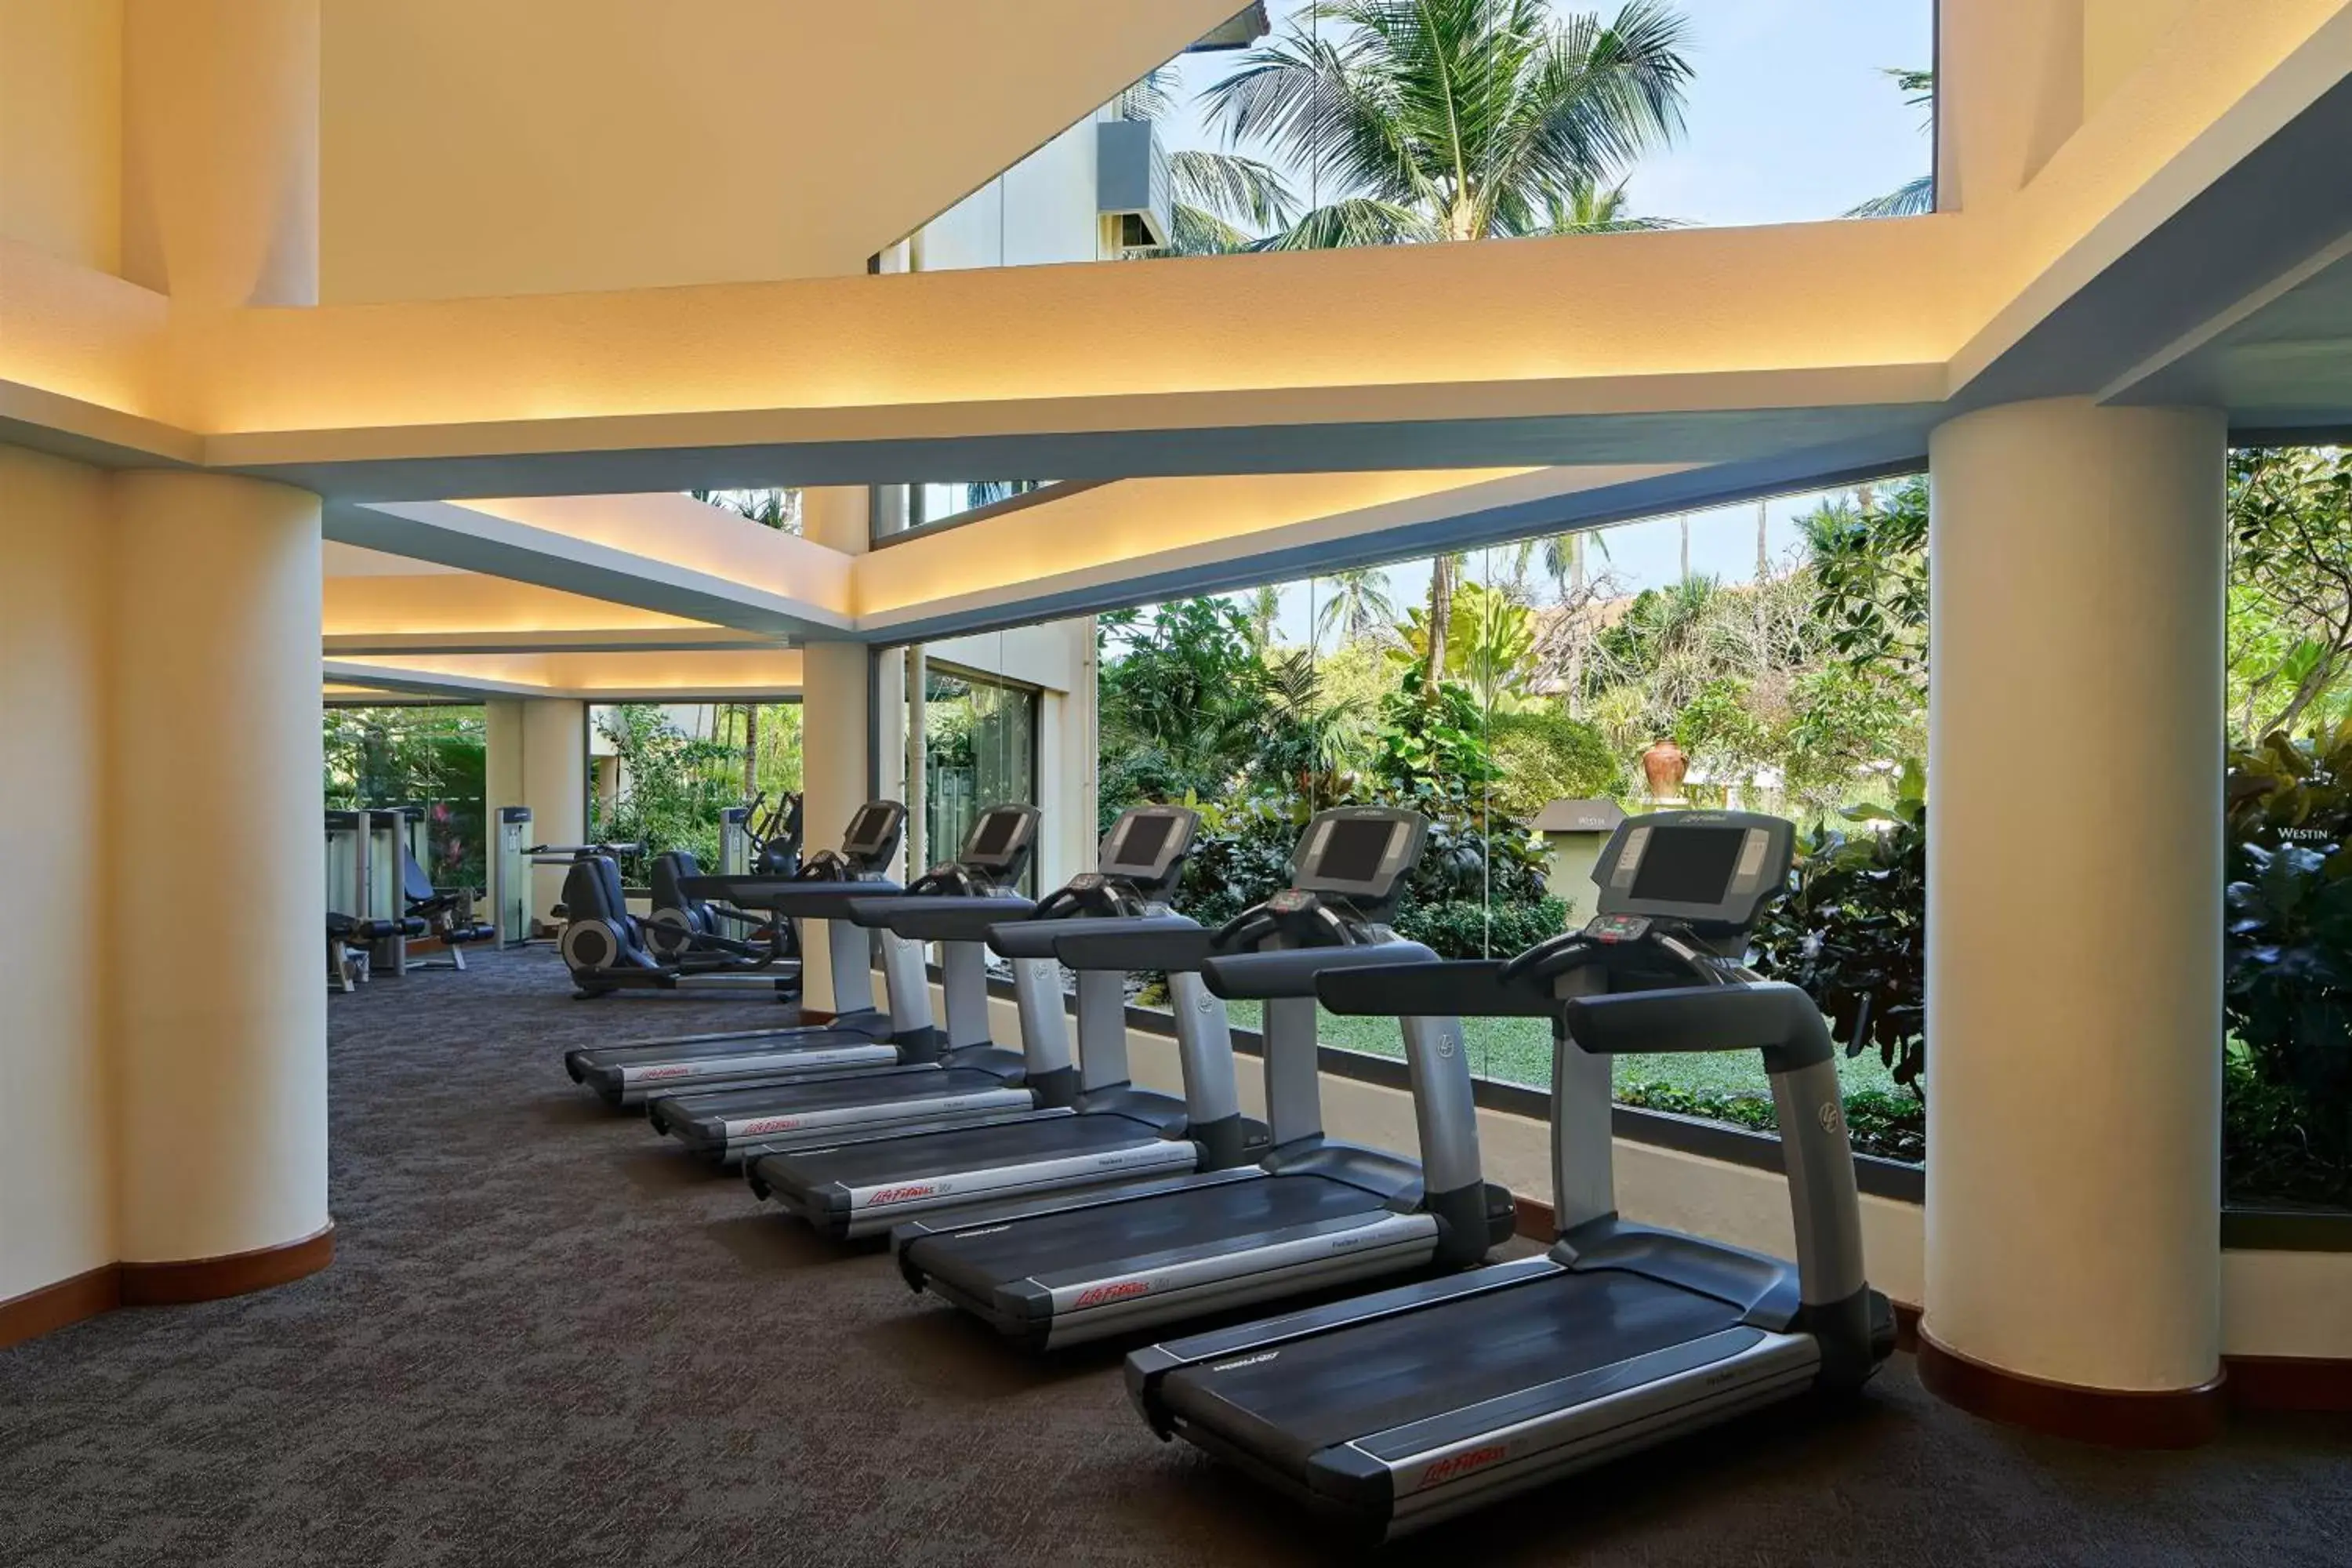 Fitness centre/facilities, Fitness Center/Facilities in The Westin Resort Nusa Dua, Bali